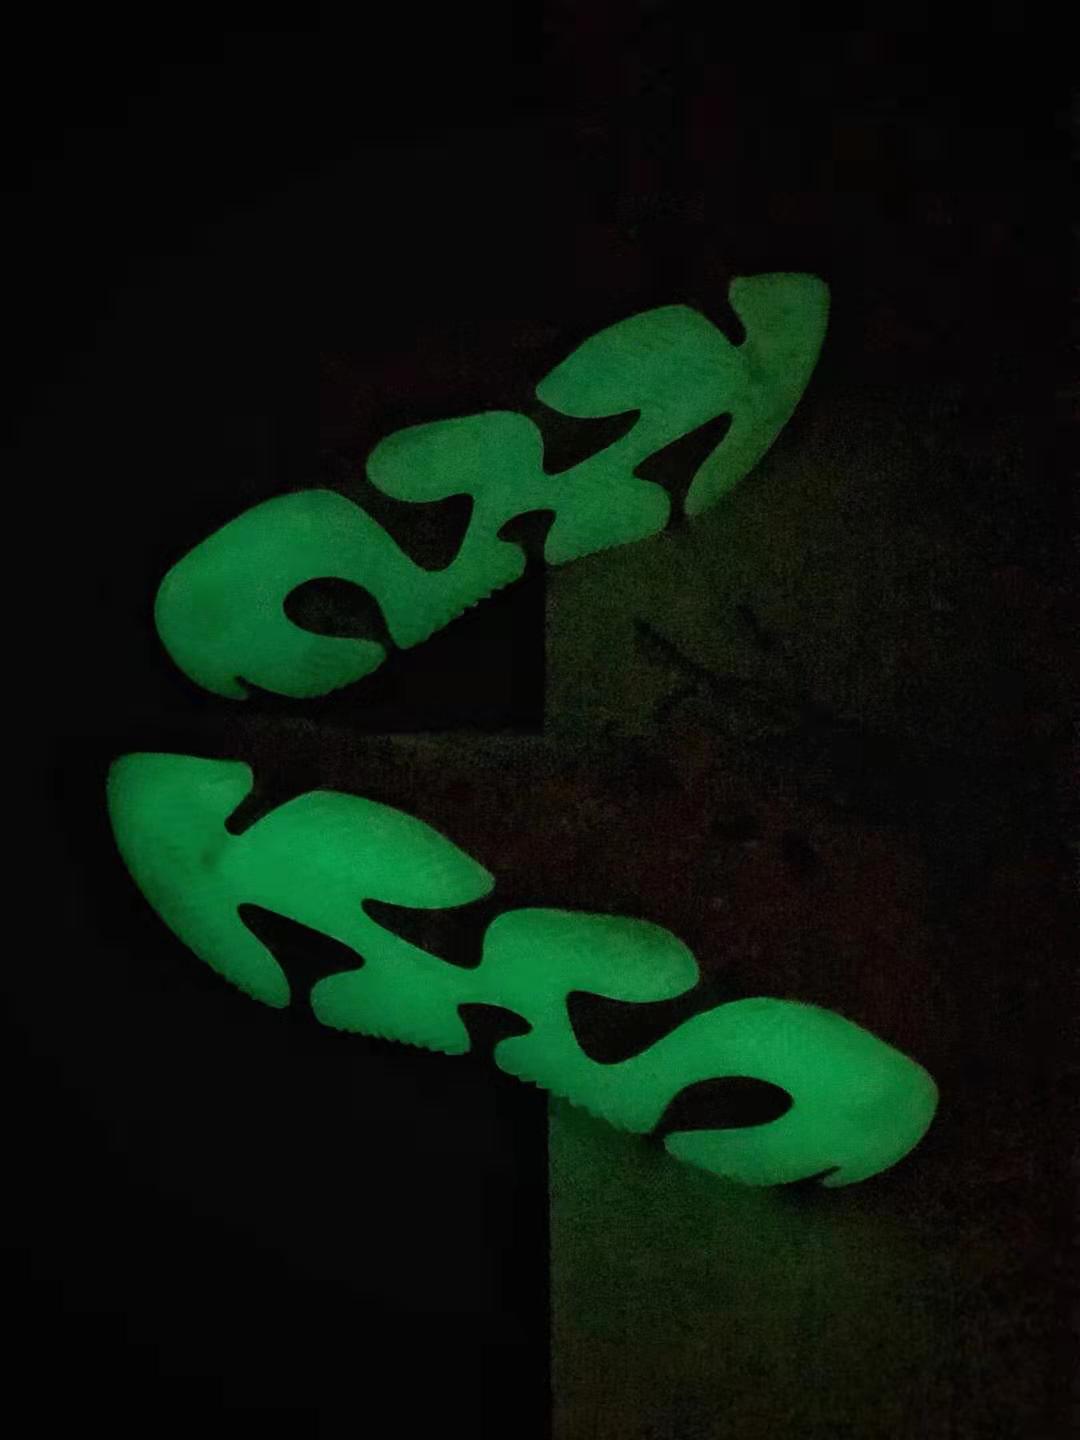 Adidas Yeezy Boost 700 'White Glow' EG6990 – Stylish and Elevated Footwear